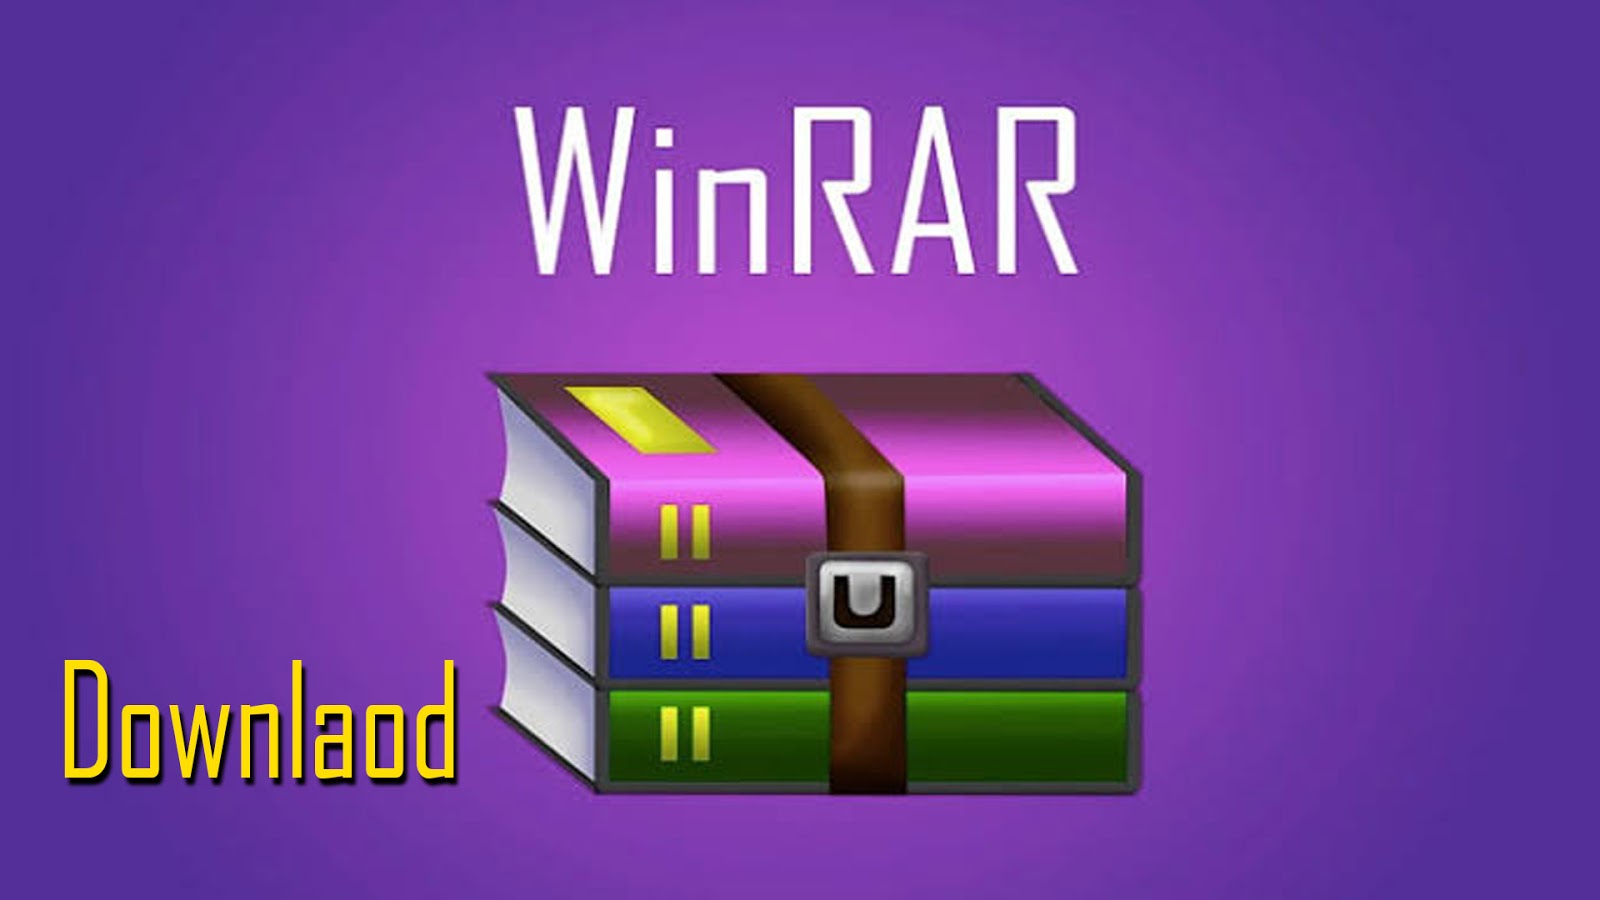 winrar archiver free download windows 8 64 bit